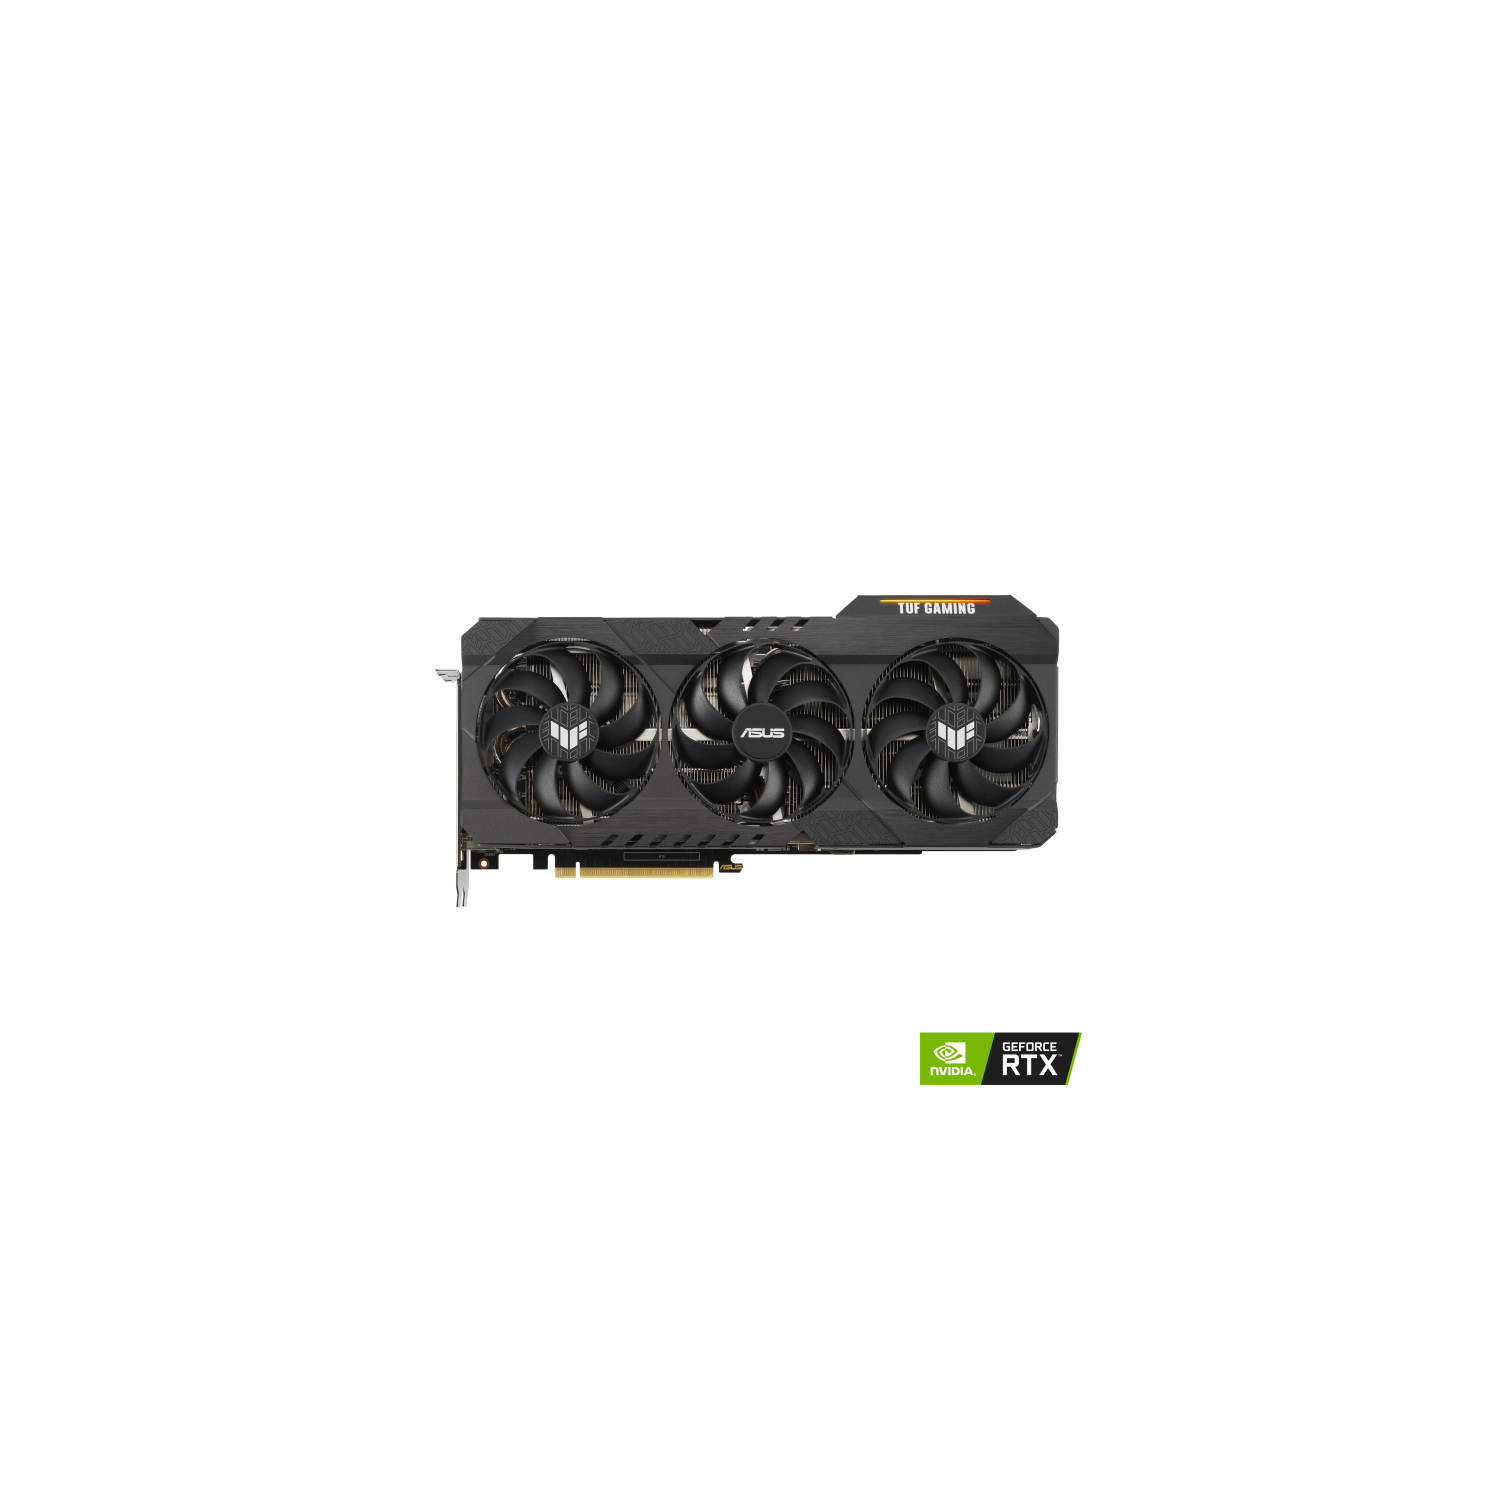 Refurbished (Good) Asus TUF GeForce RTX 3080 10GB GDDR6X Gaming Graphics Card